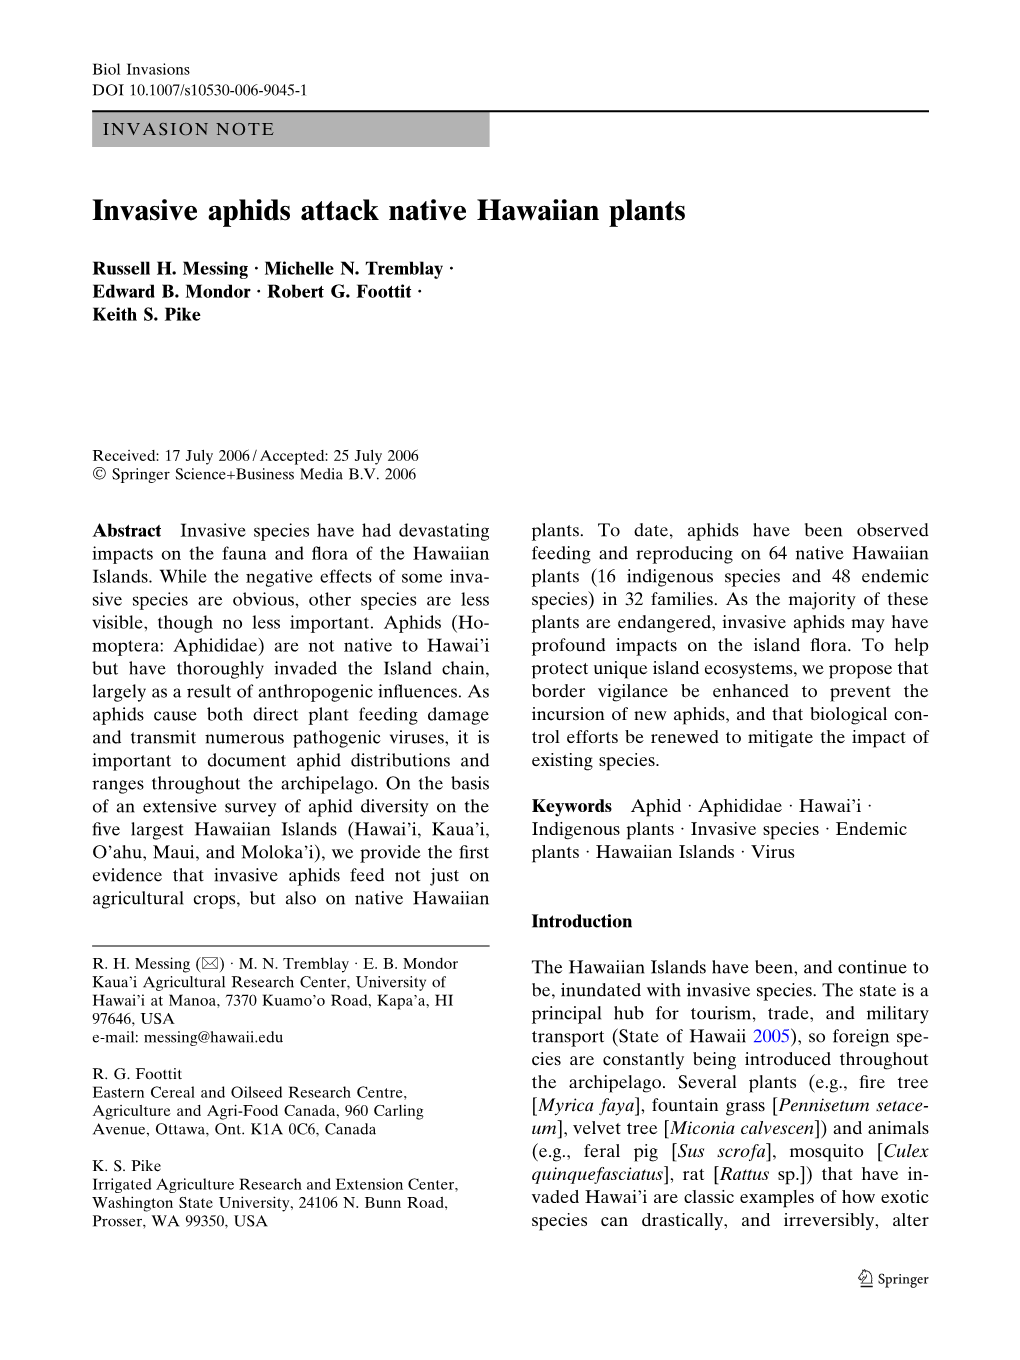 Invasive Aphids Attack Native Hawaiian Plants